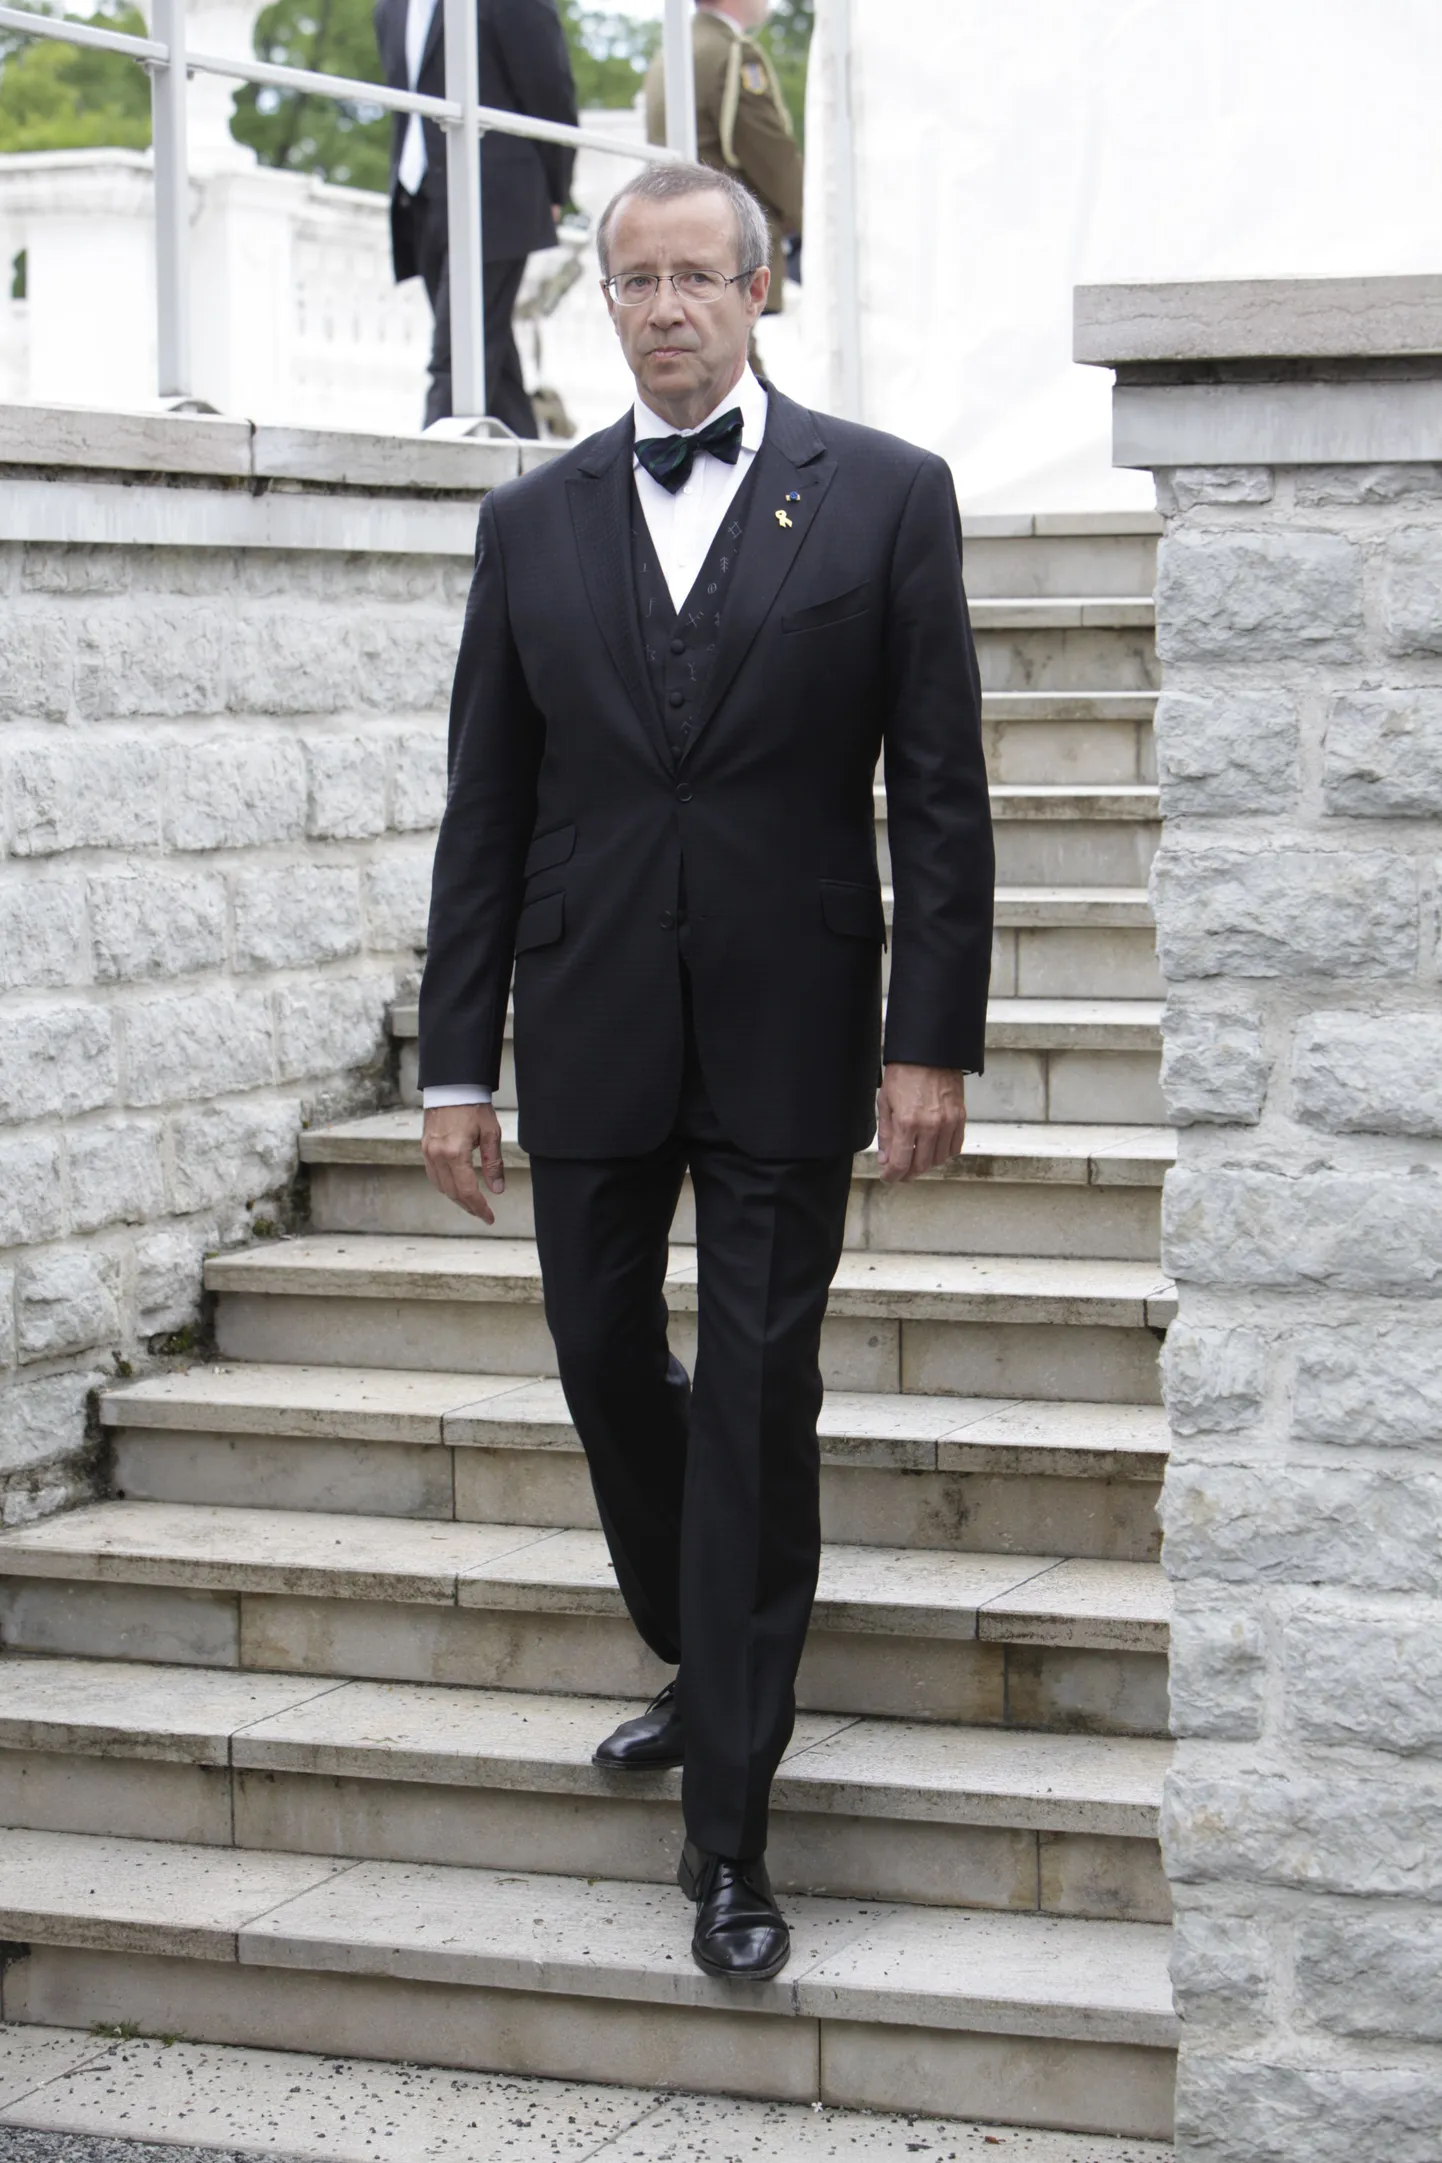 President Toomas Hendrik Ilves